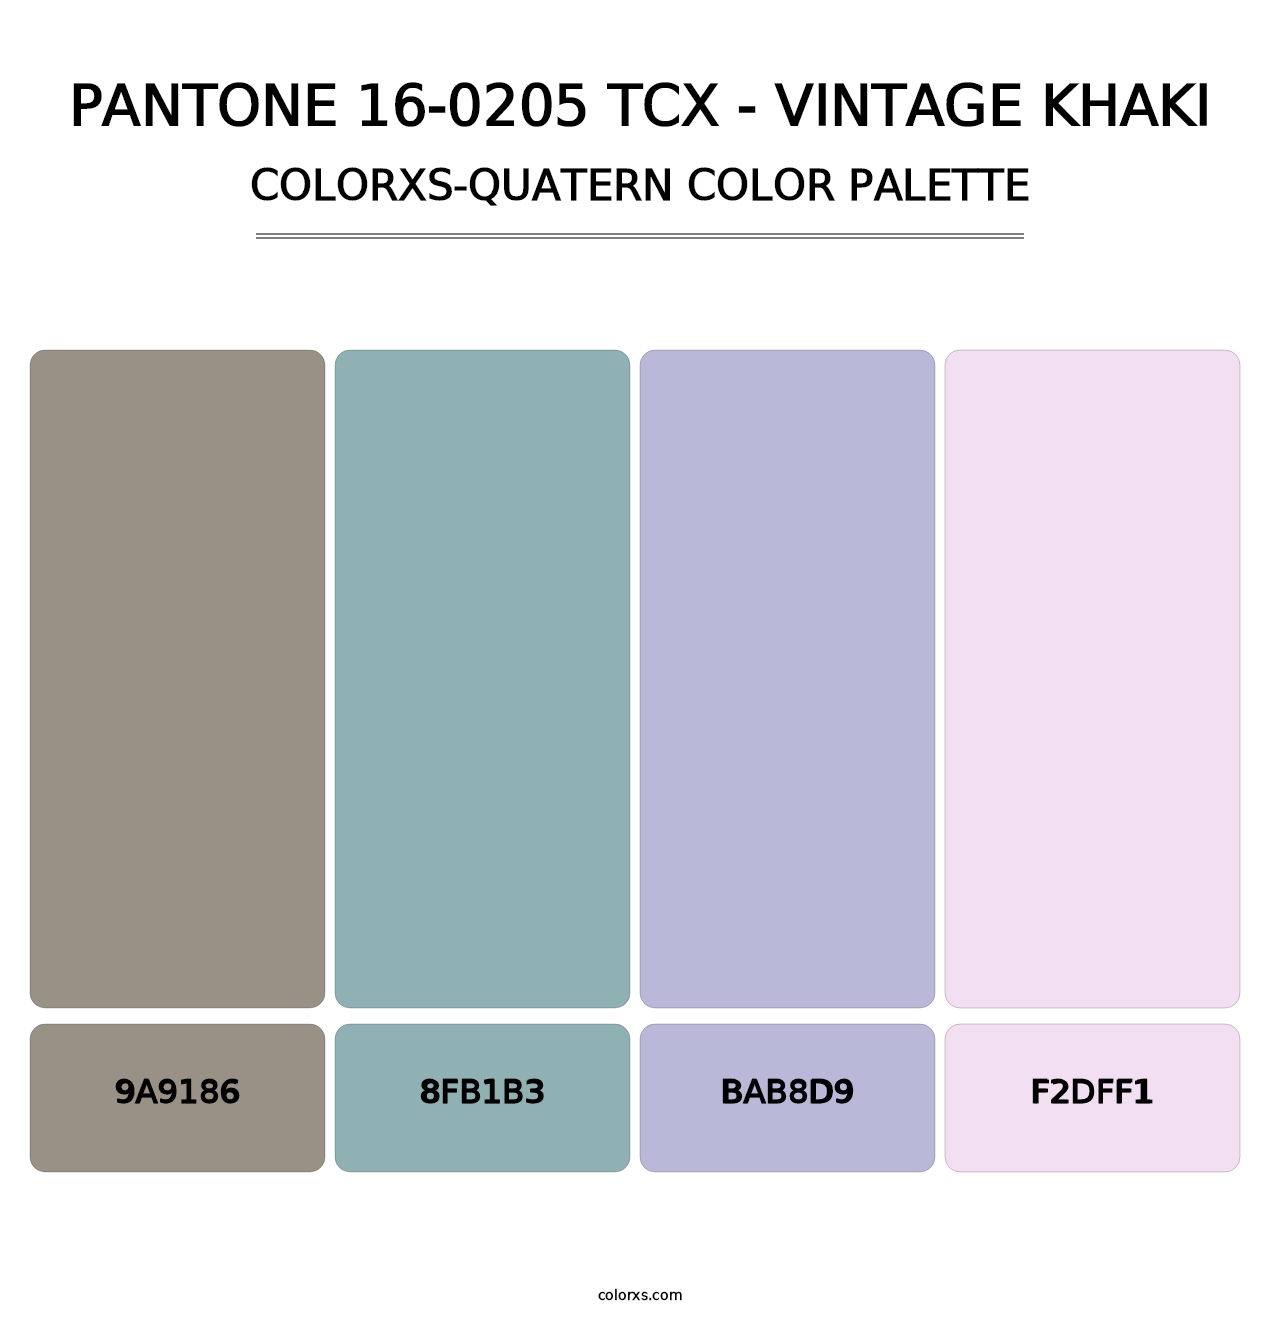 PANTONE 16-0205 TCX - Vintage Khaki - Colorxs Quatern Palette